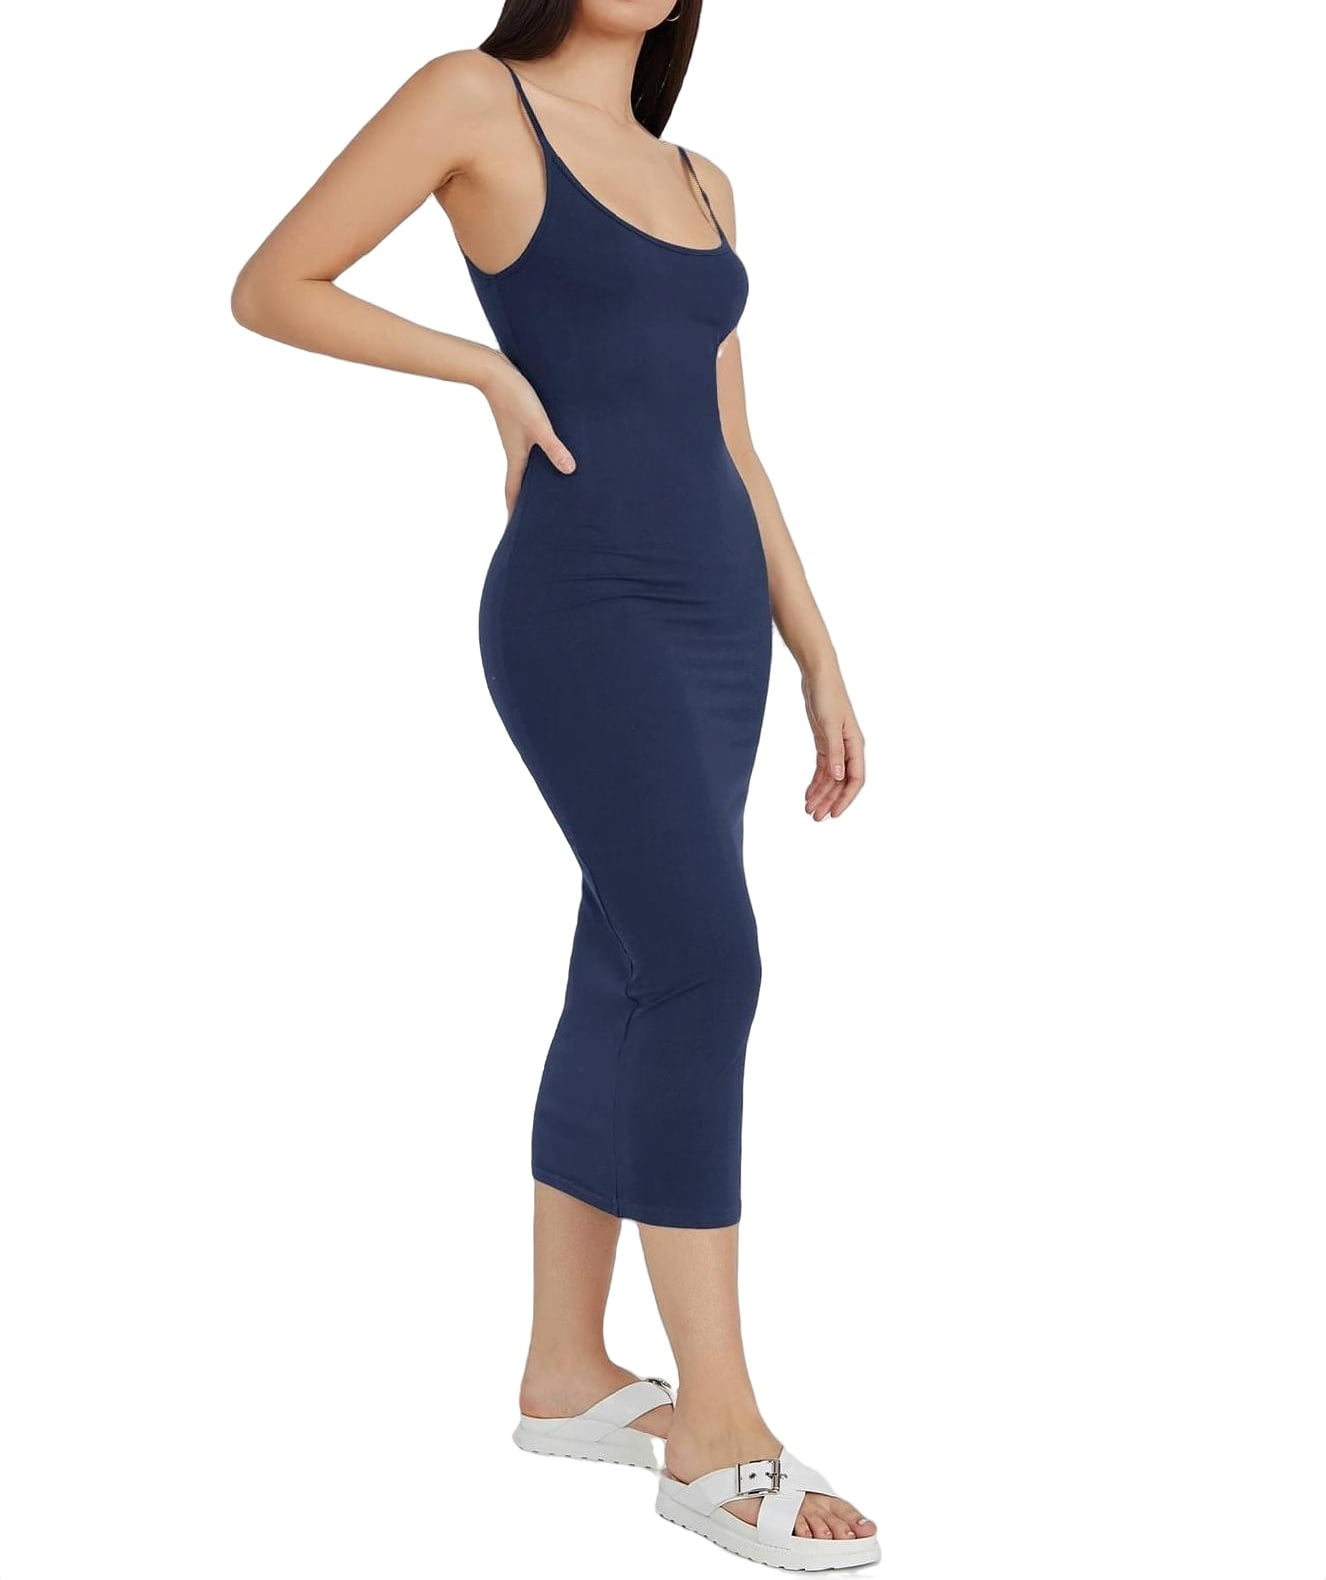 Women Dresses Casual Solid Cami Dress Navy Blue M - Walmart.com